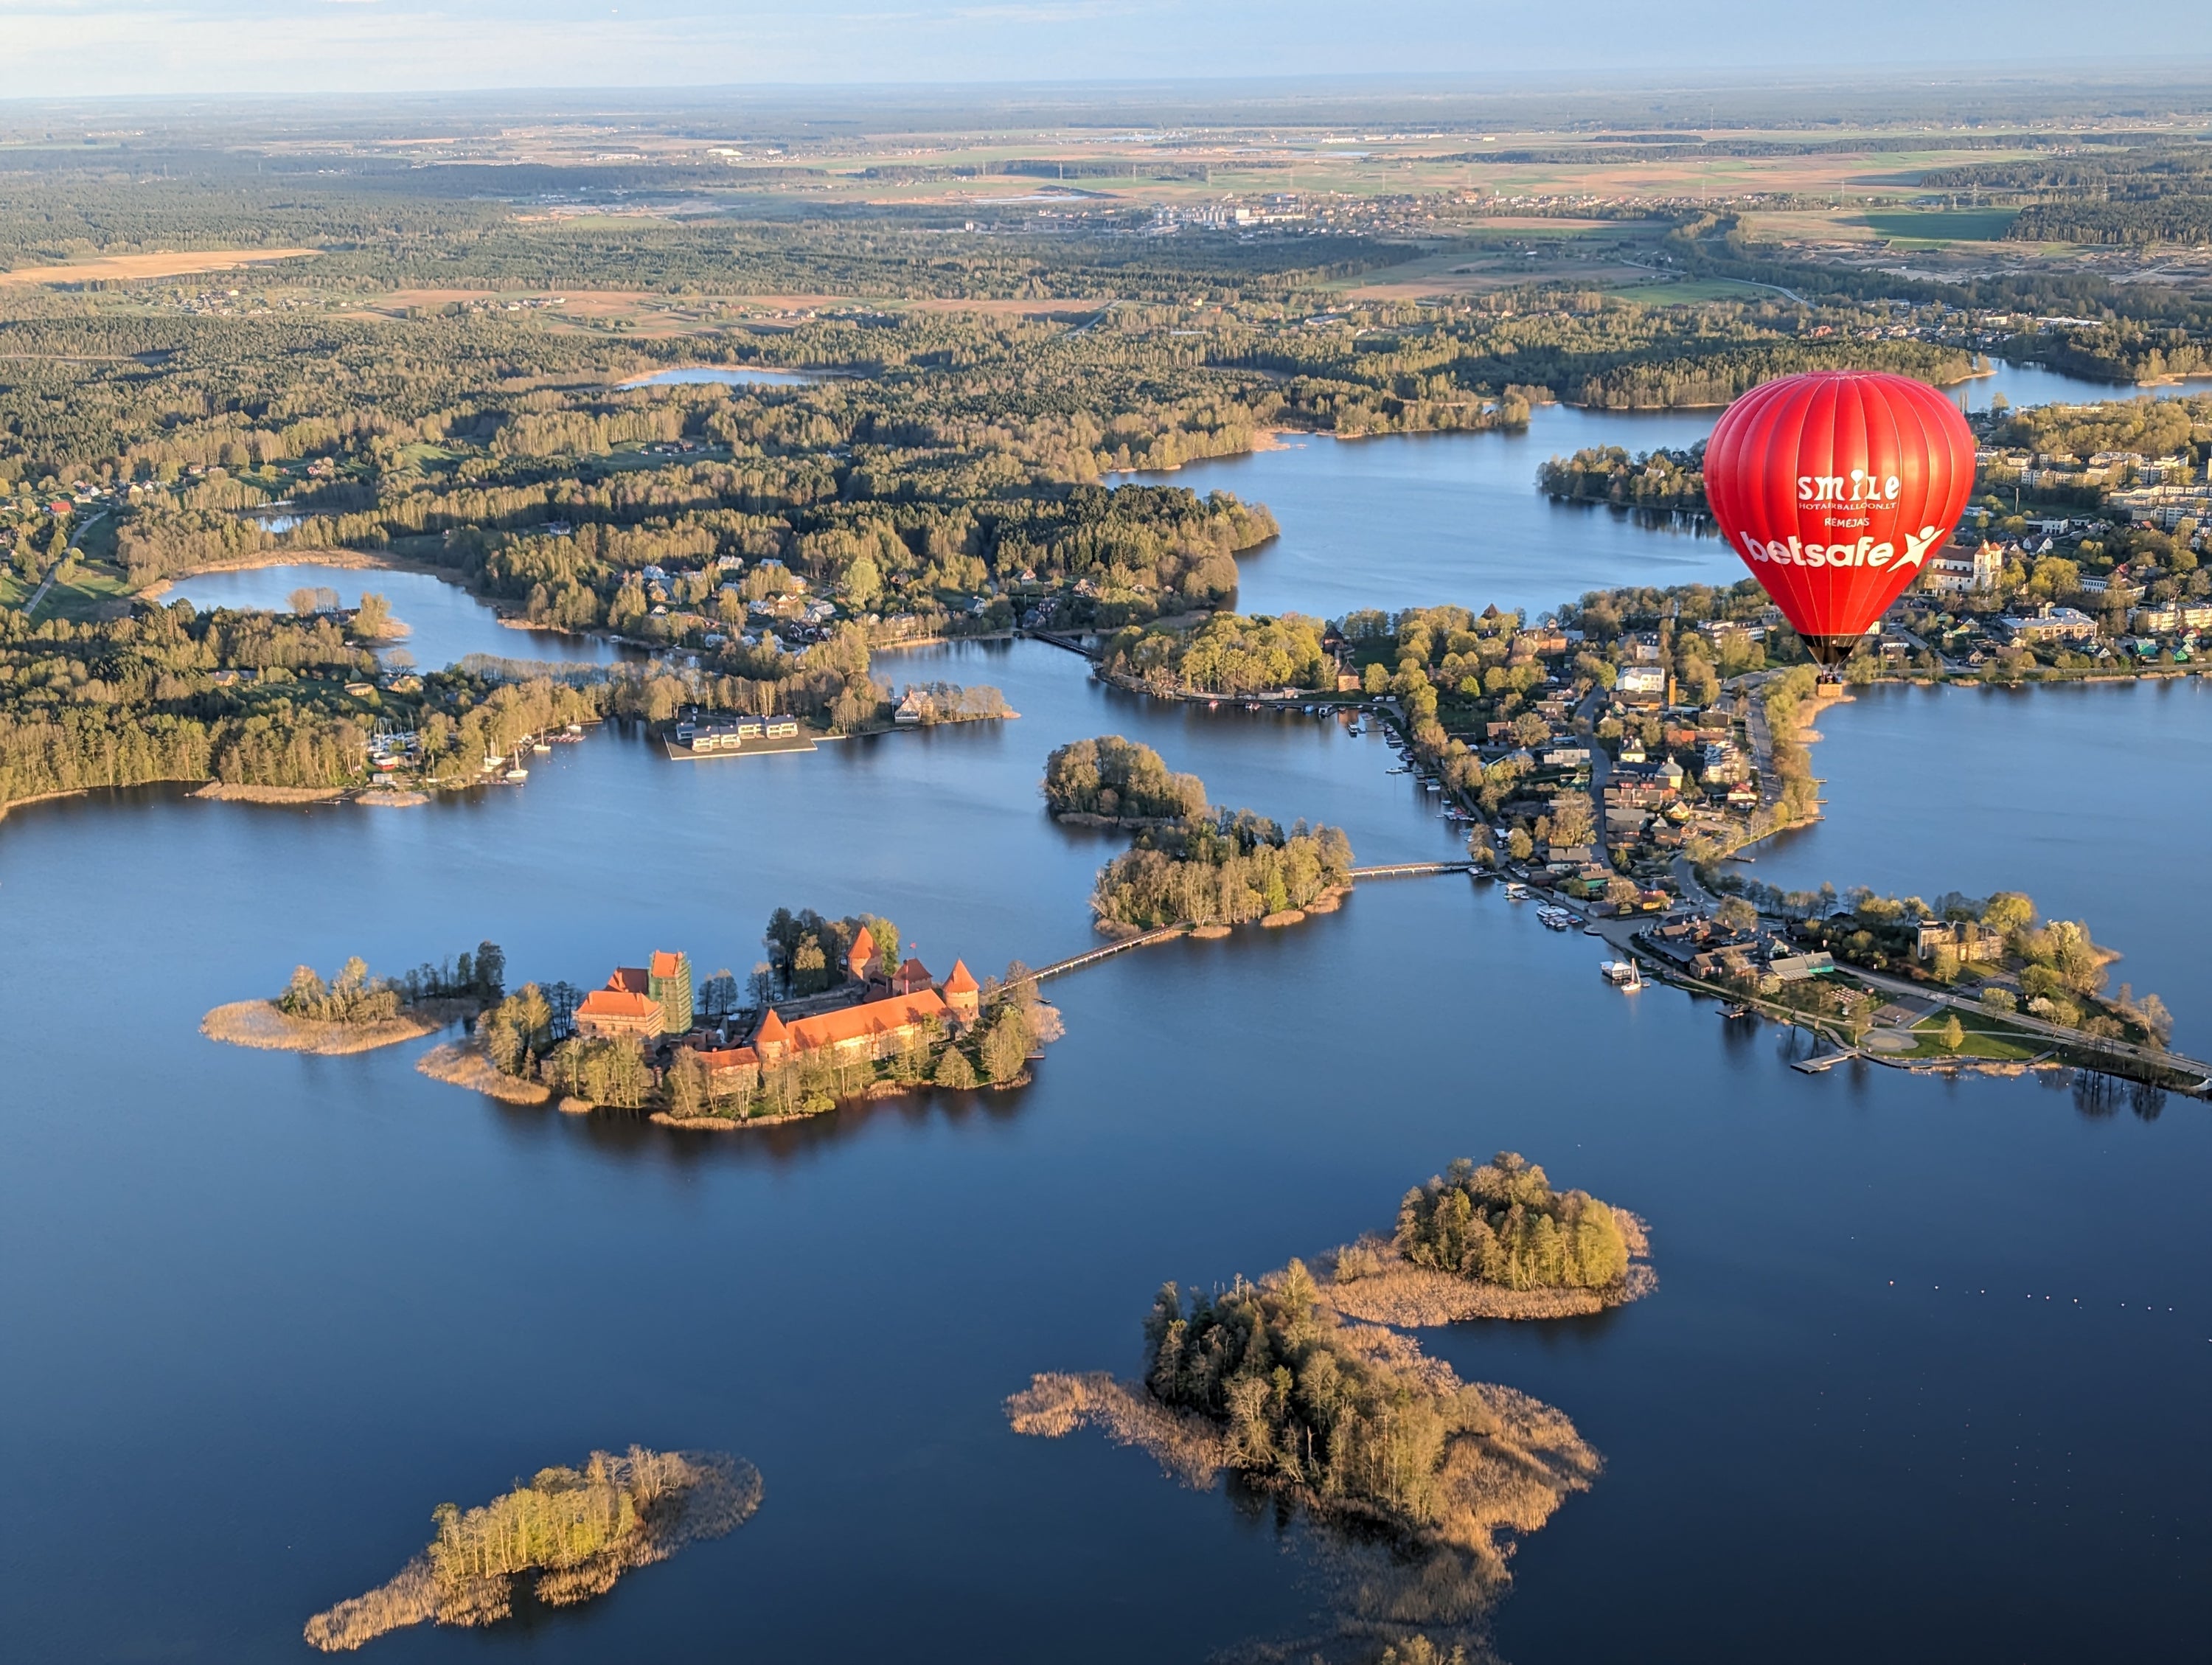 Lake Galve is home to the fairytale-esque Trakai Castle